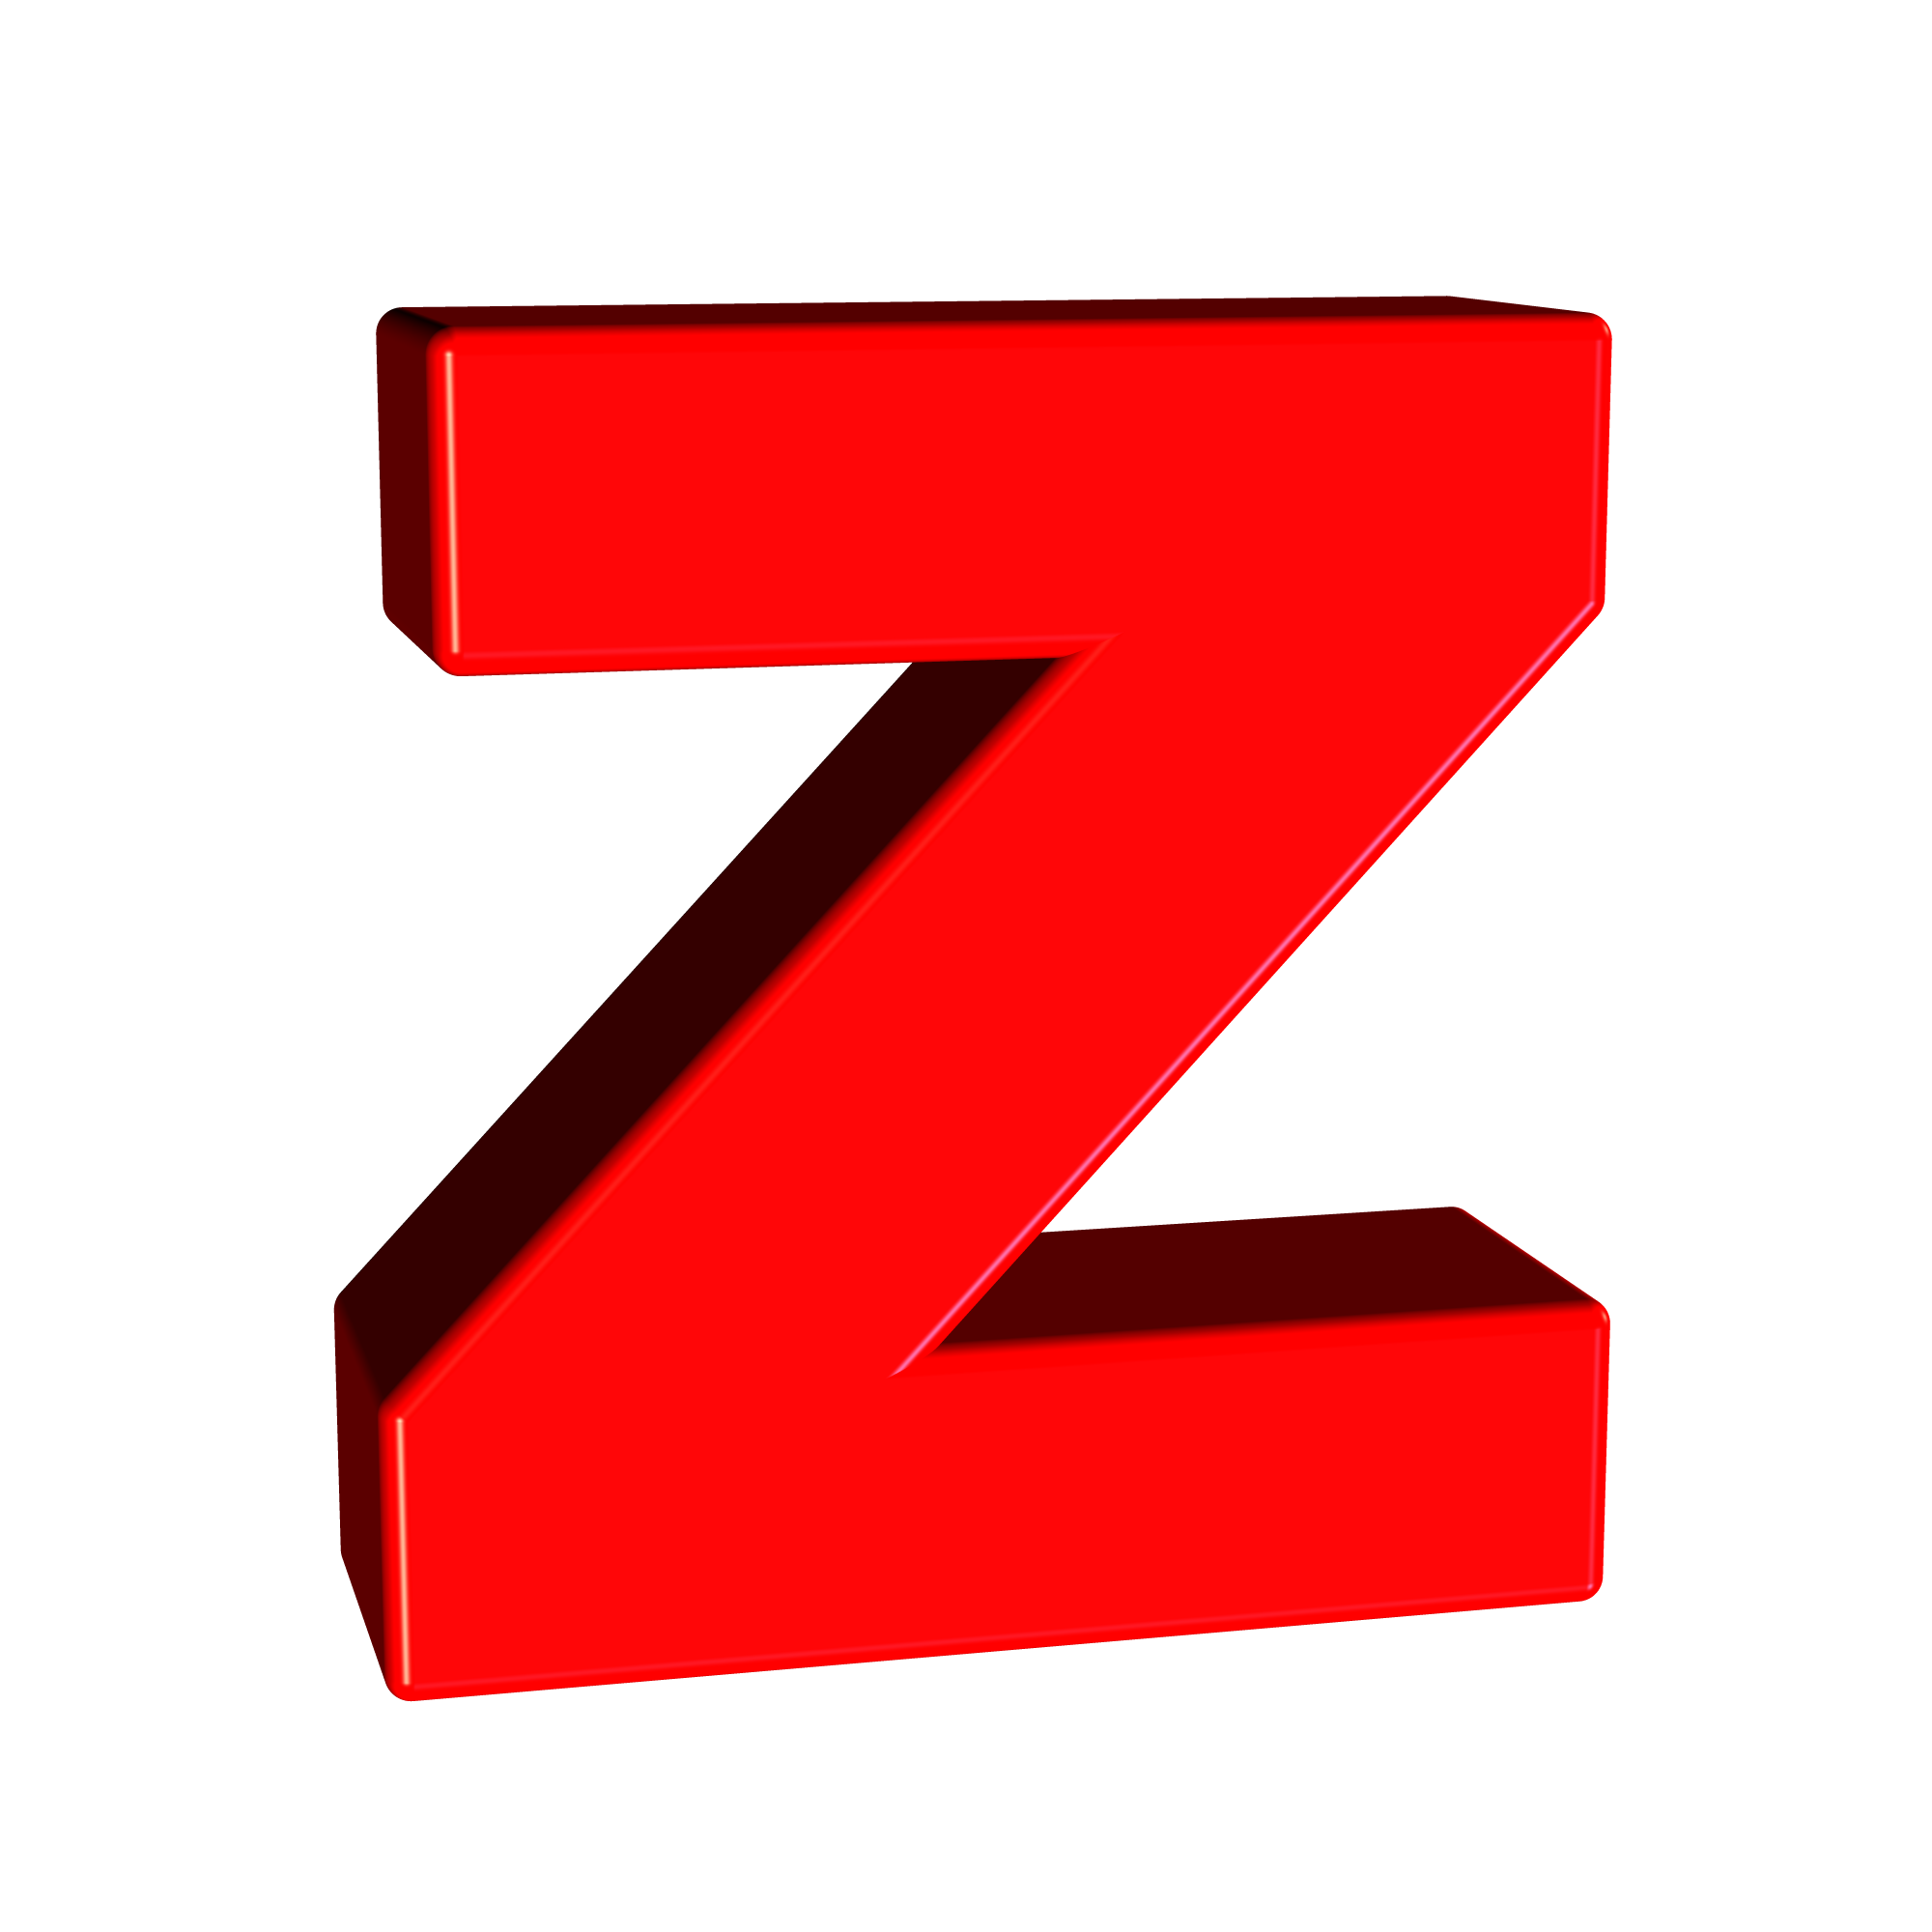 Z вид. Буква z. Большая буква z. Объемная буква z. Красная буква z.